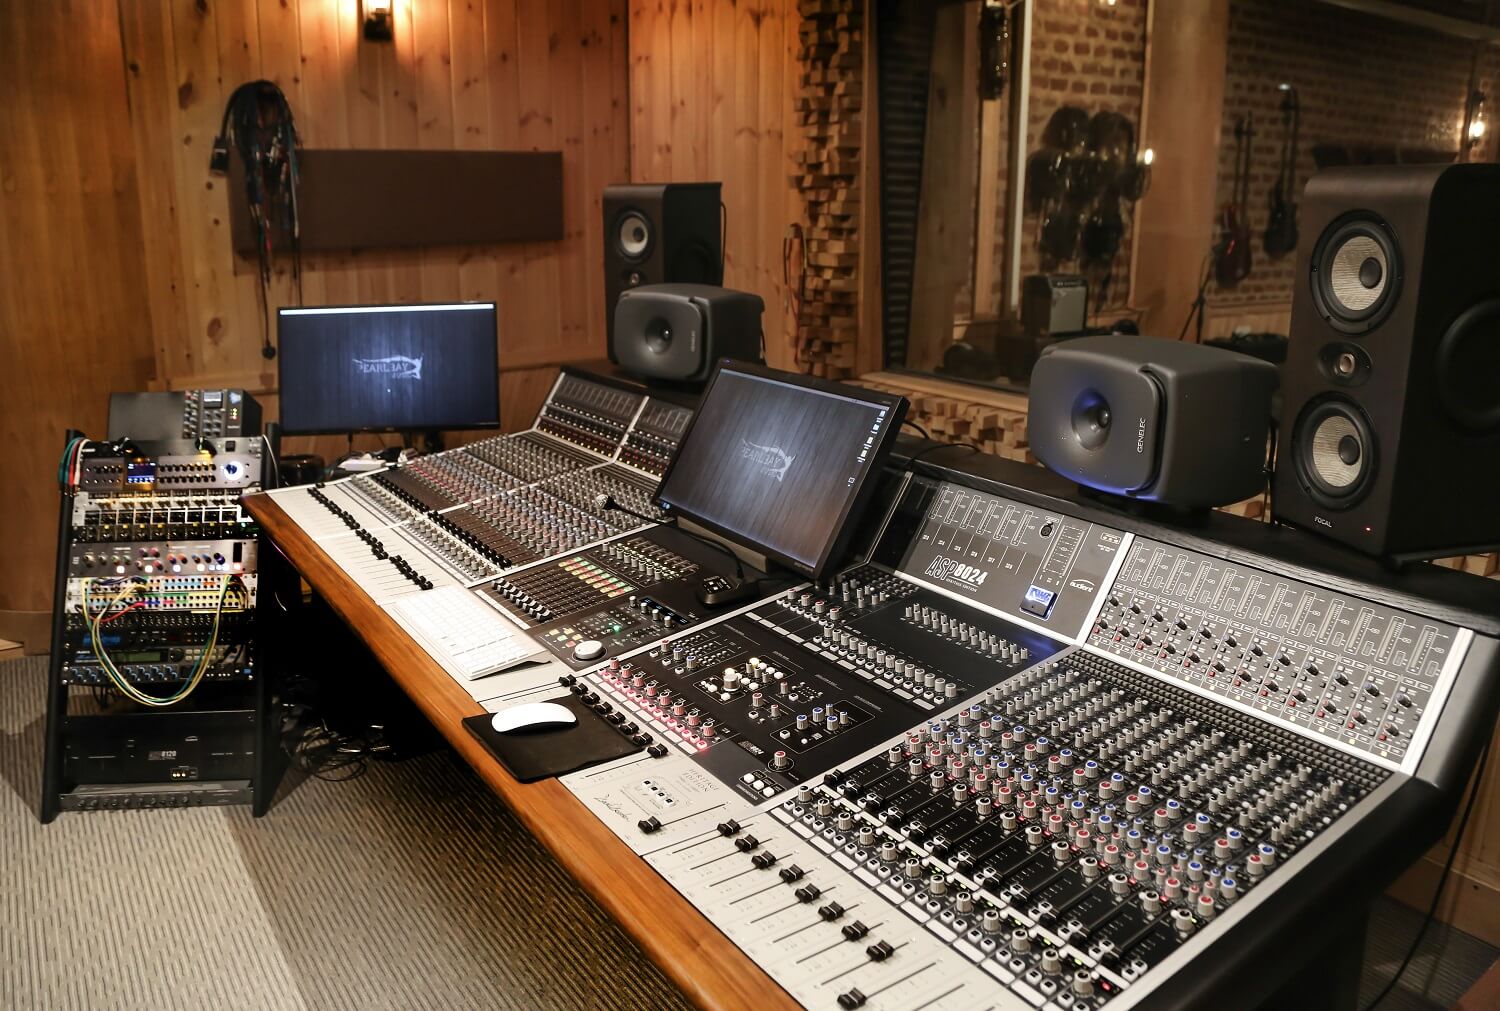 Mixing console in studio complex